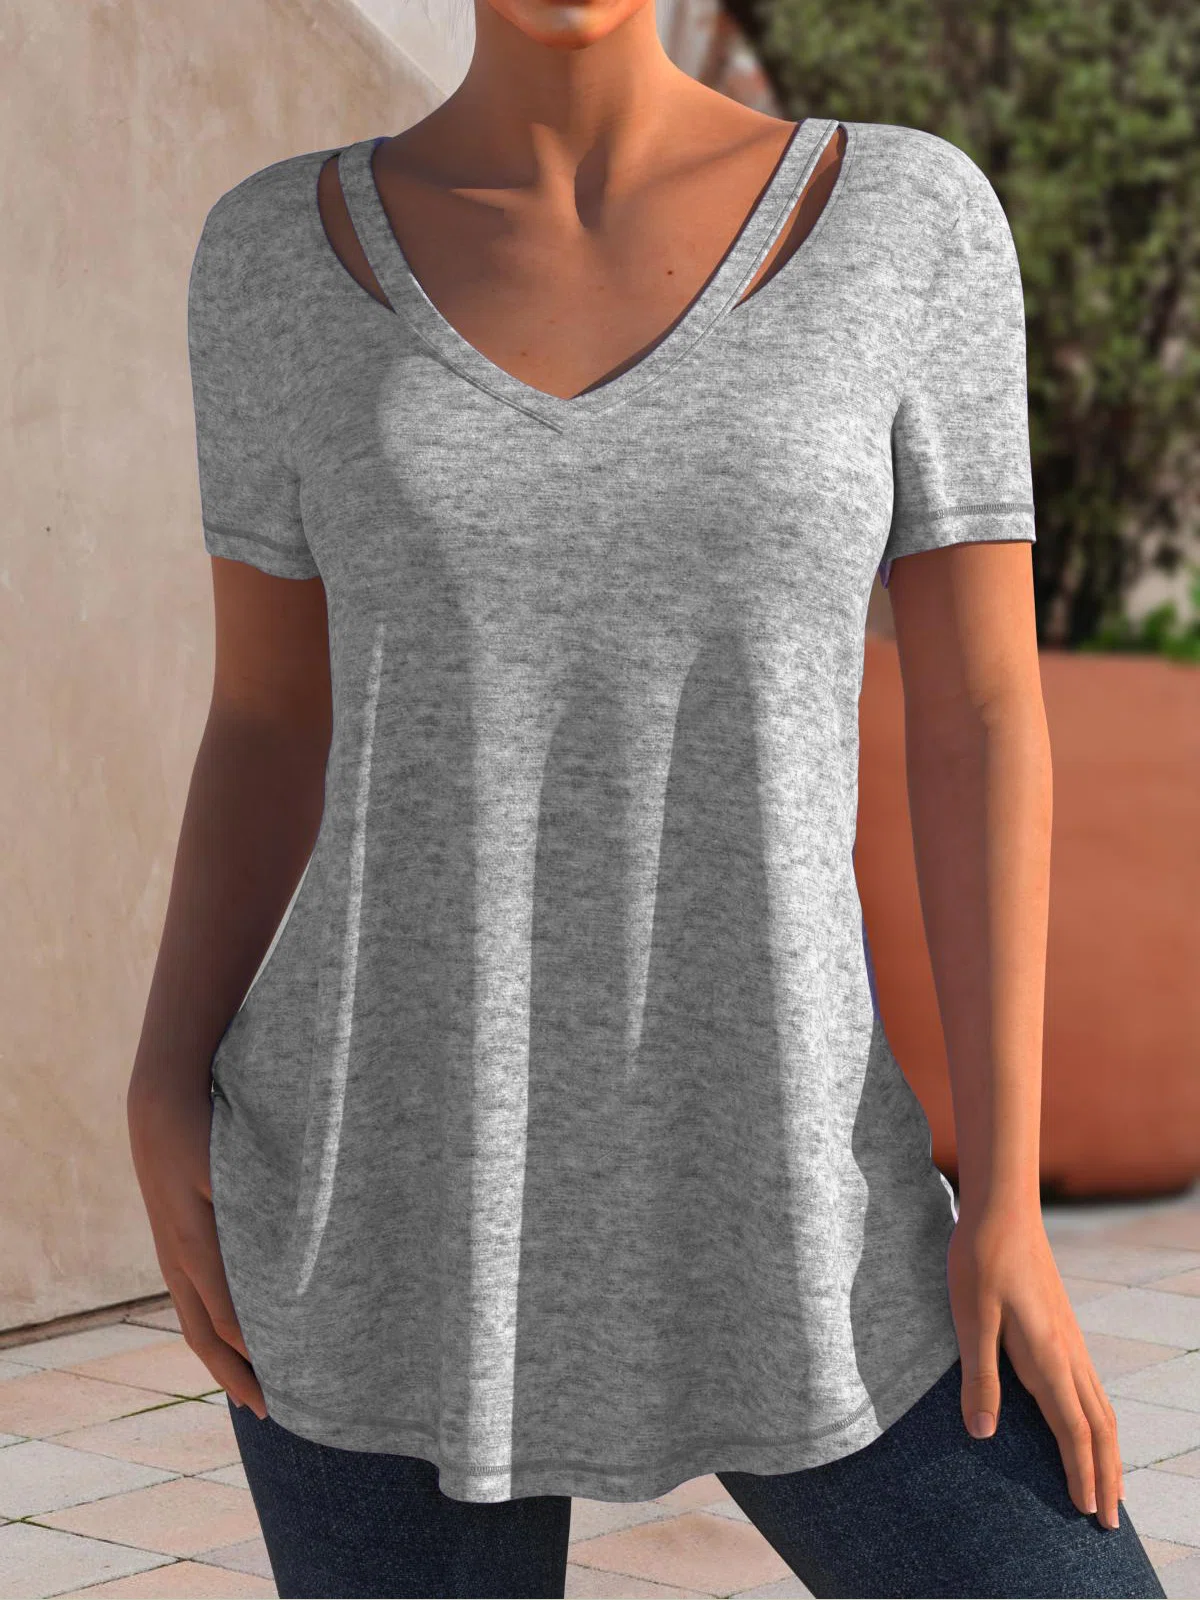 V Neck Cut-out Basic Plain Casual Short Sleeve T-Shirt/Tee